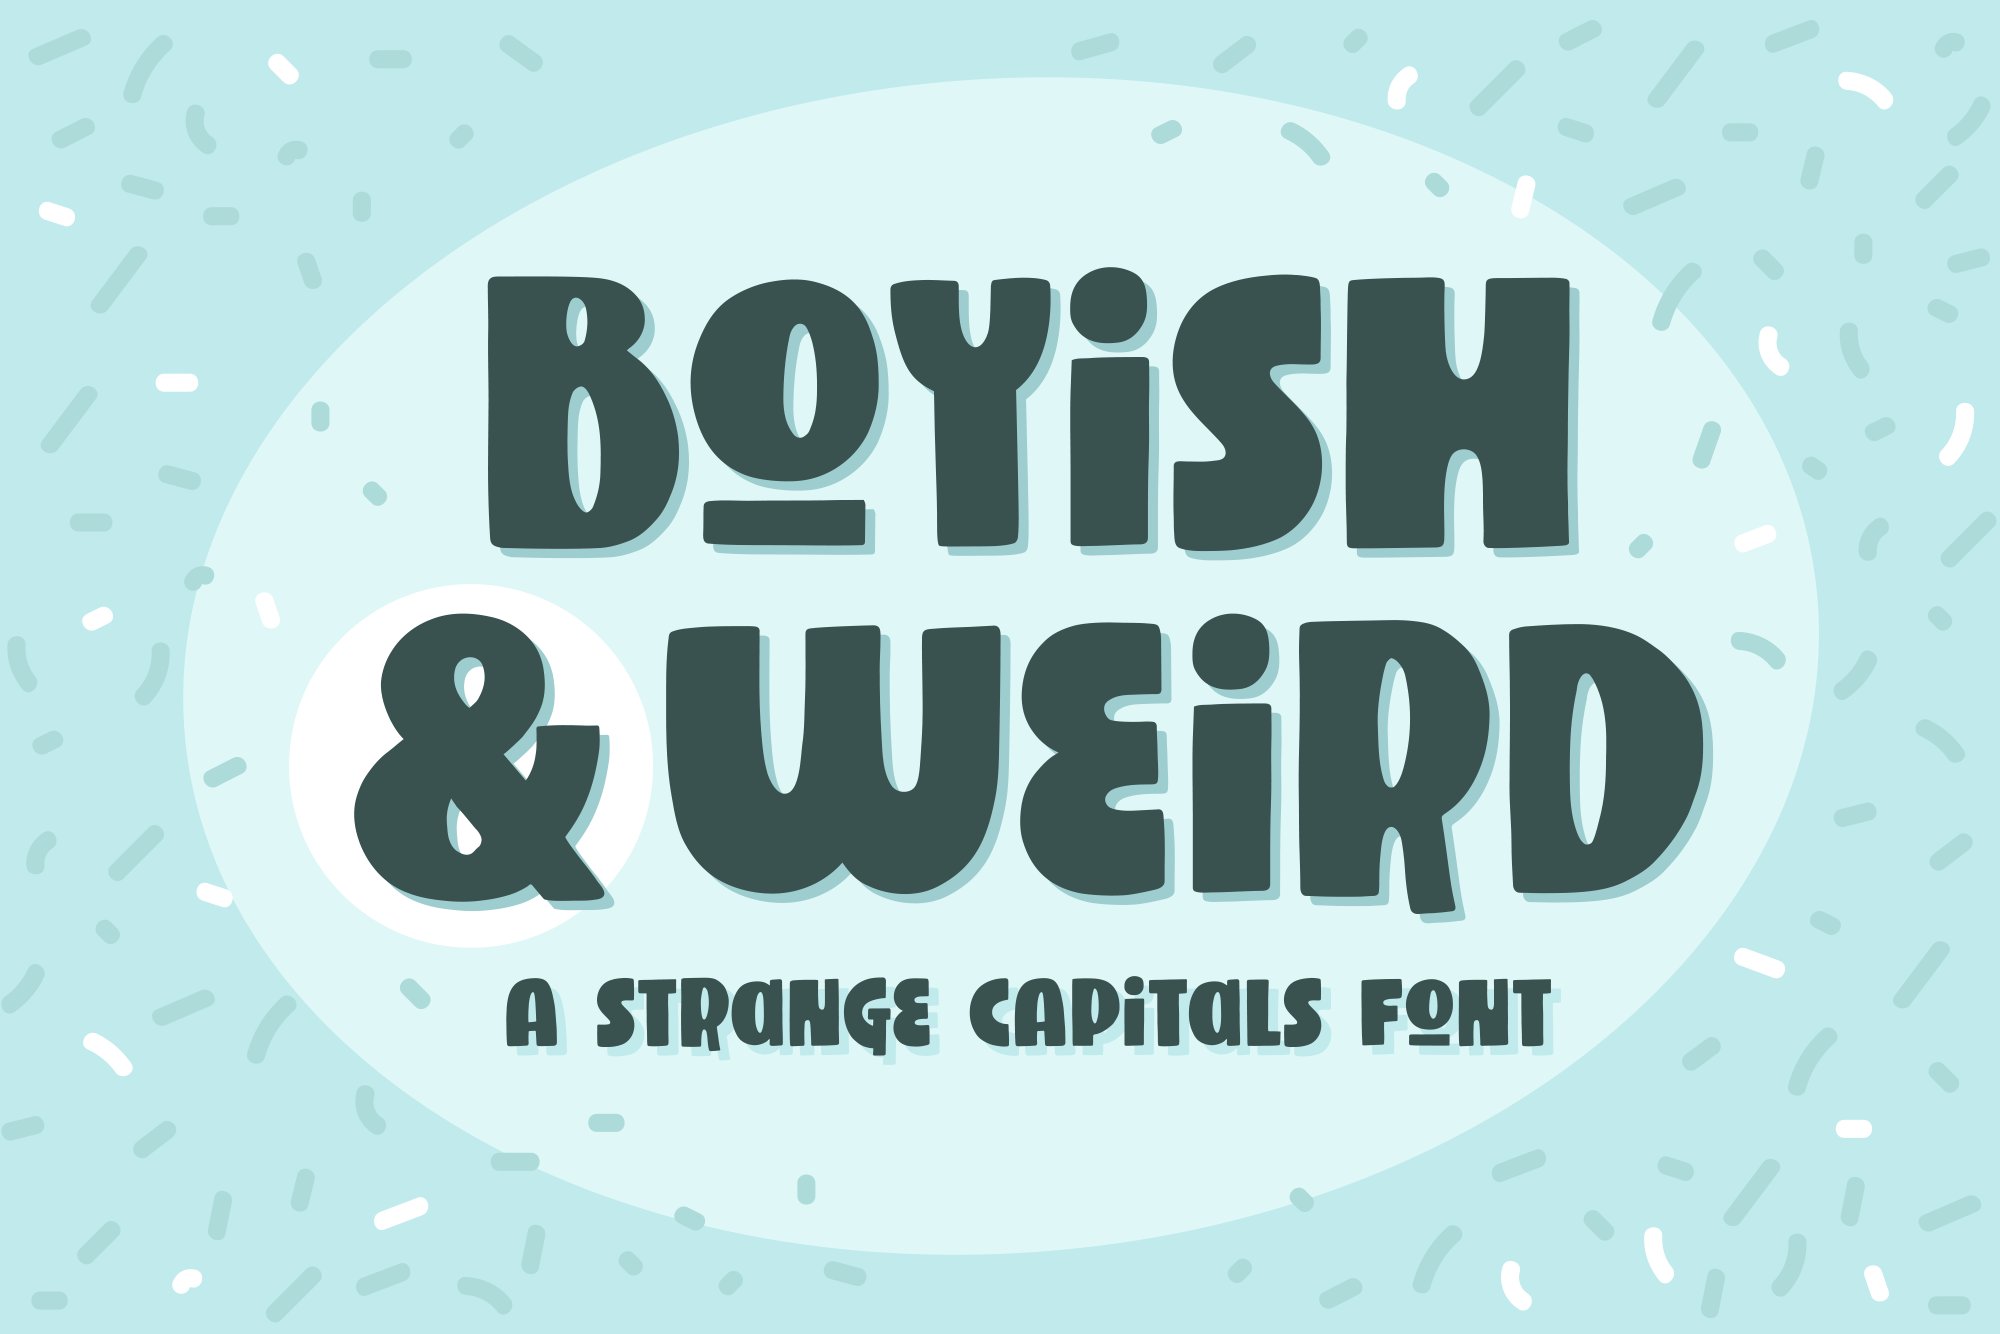 Boyish & Weird, a strange font cover image.